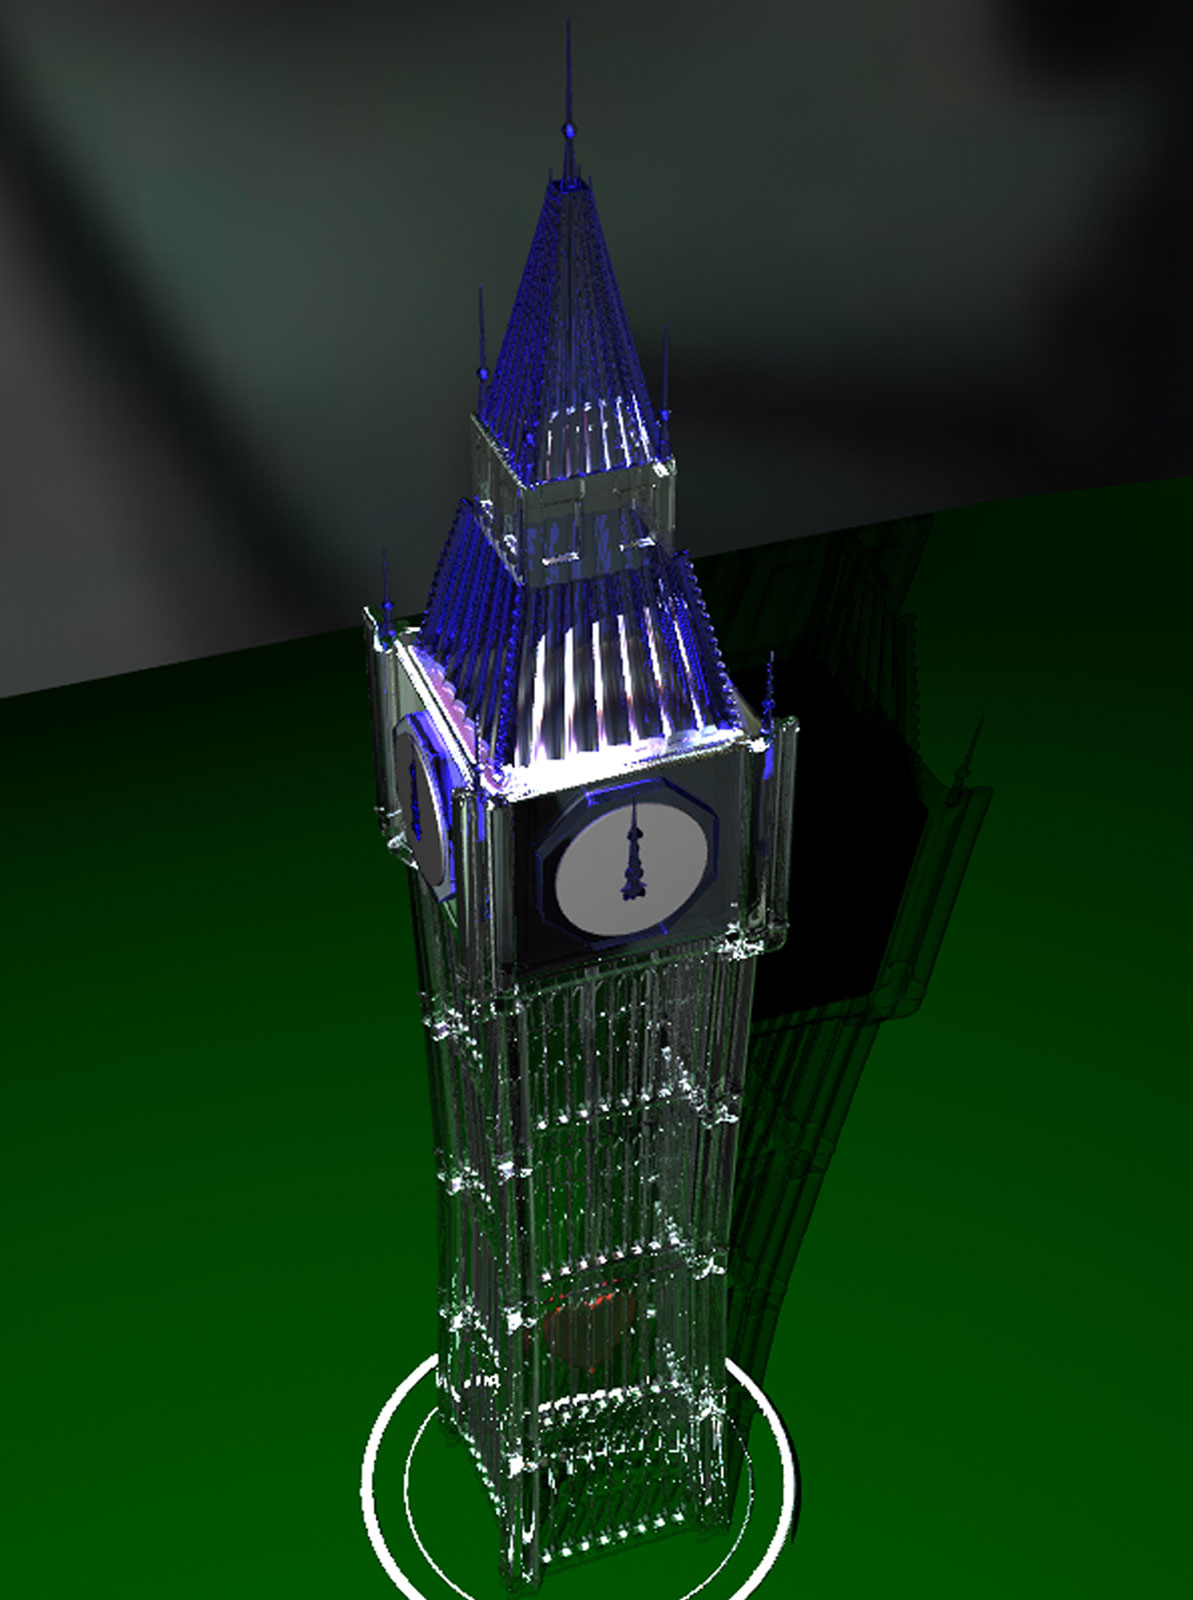 3D rendering of Clockwise